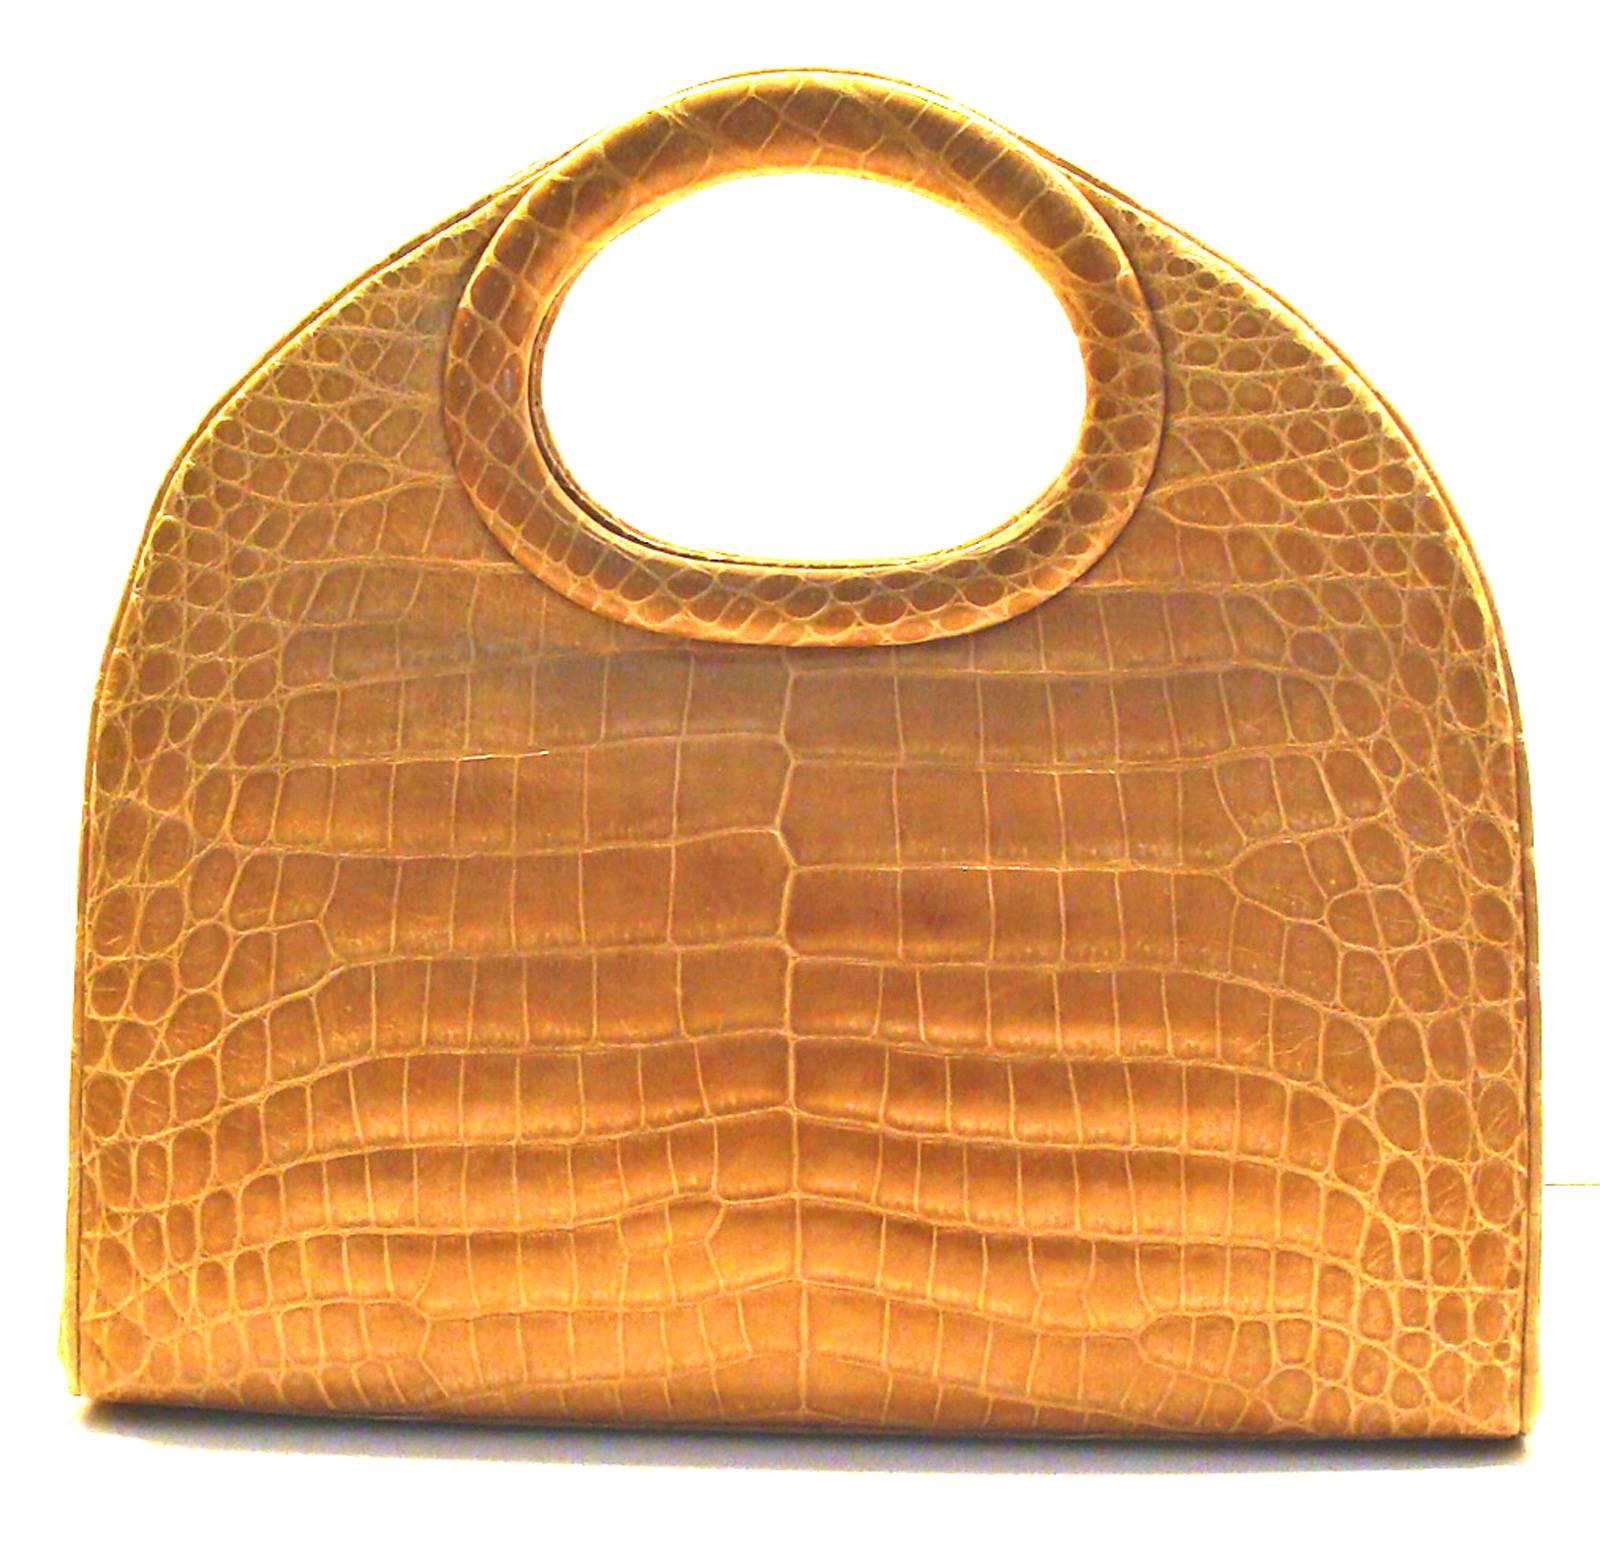 Oversized Architectural Handbag in Blonde Alligator SPRING 1